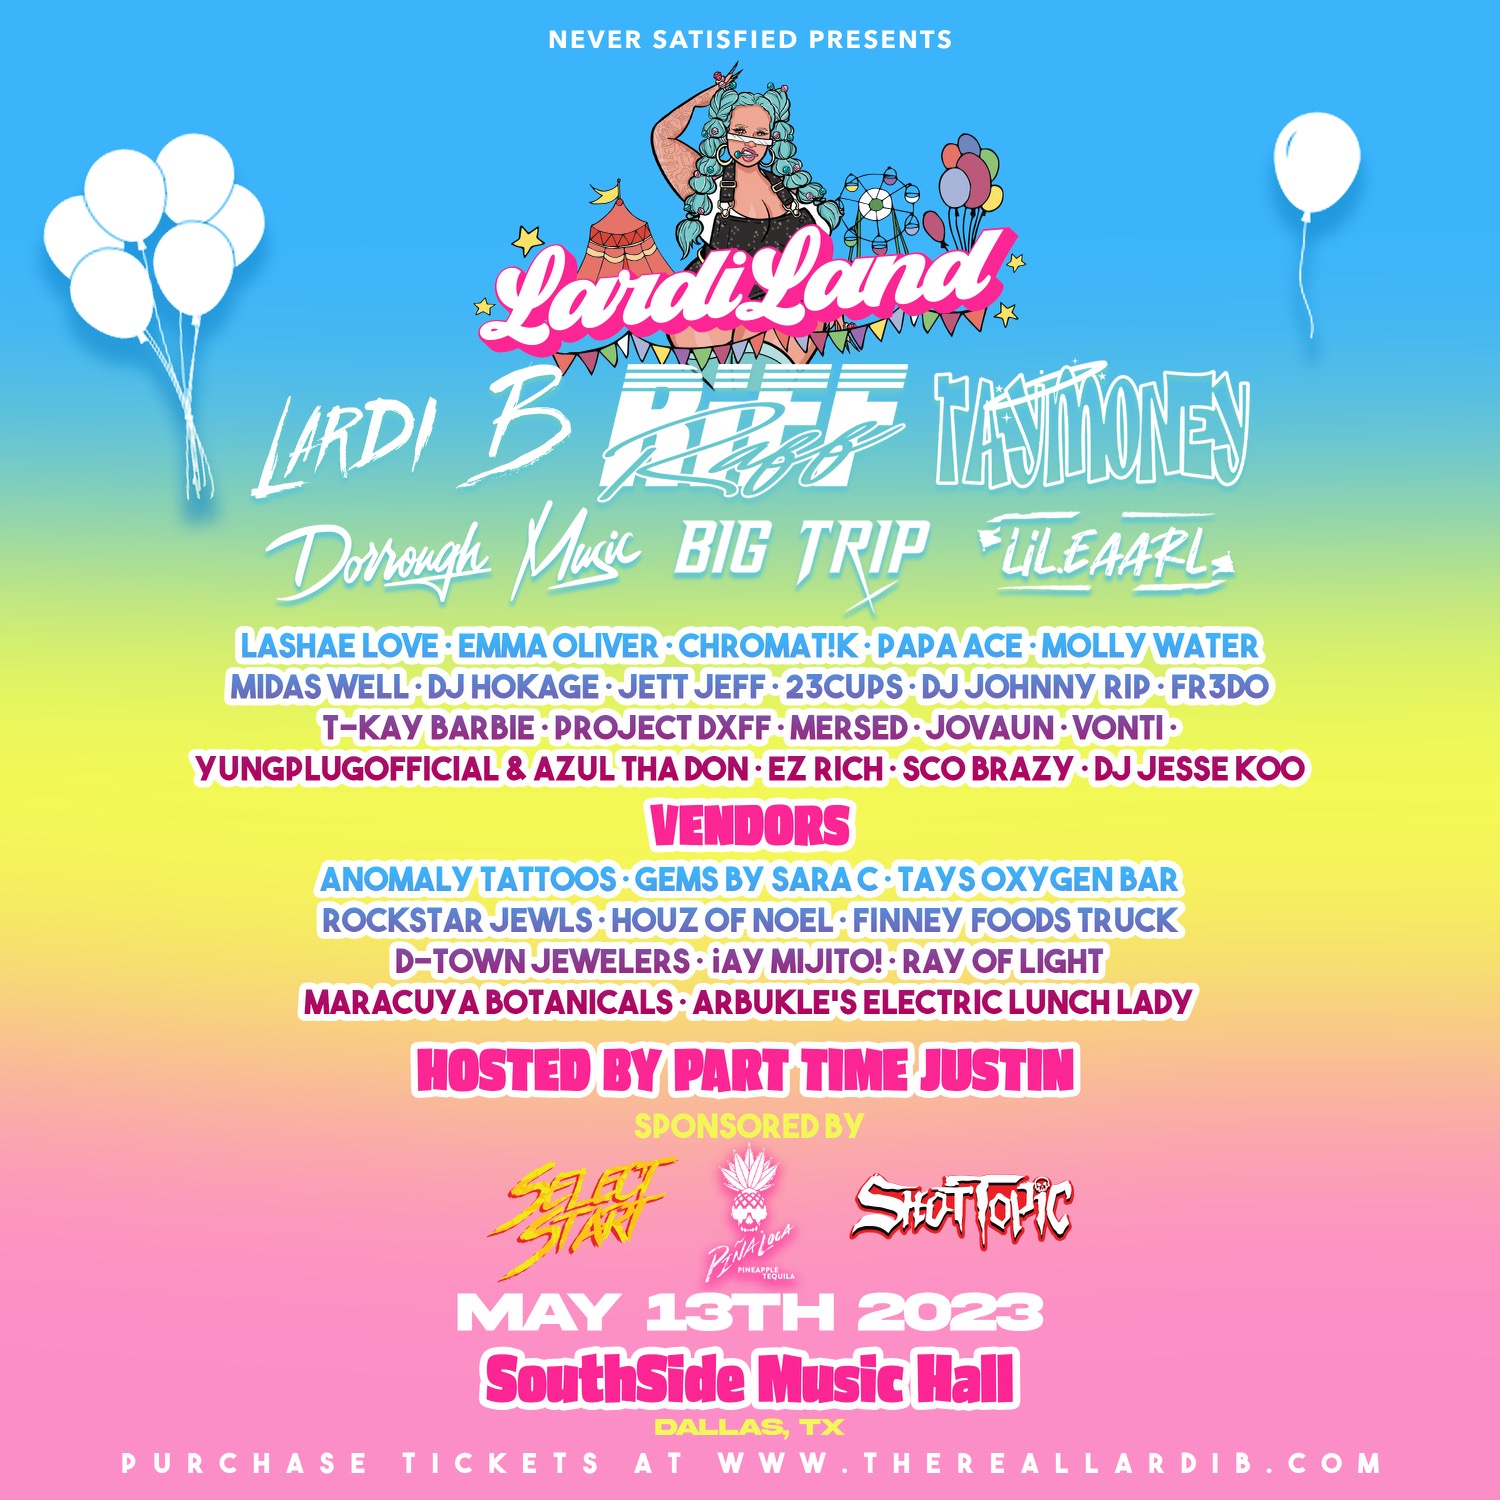 Riff Raff Slotted to Headline Lardi B's "Lardi Land" Festival in Dallas May 13th 